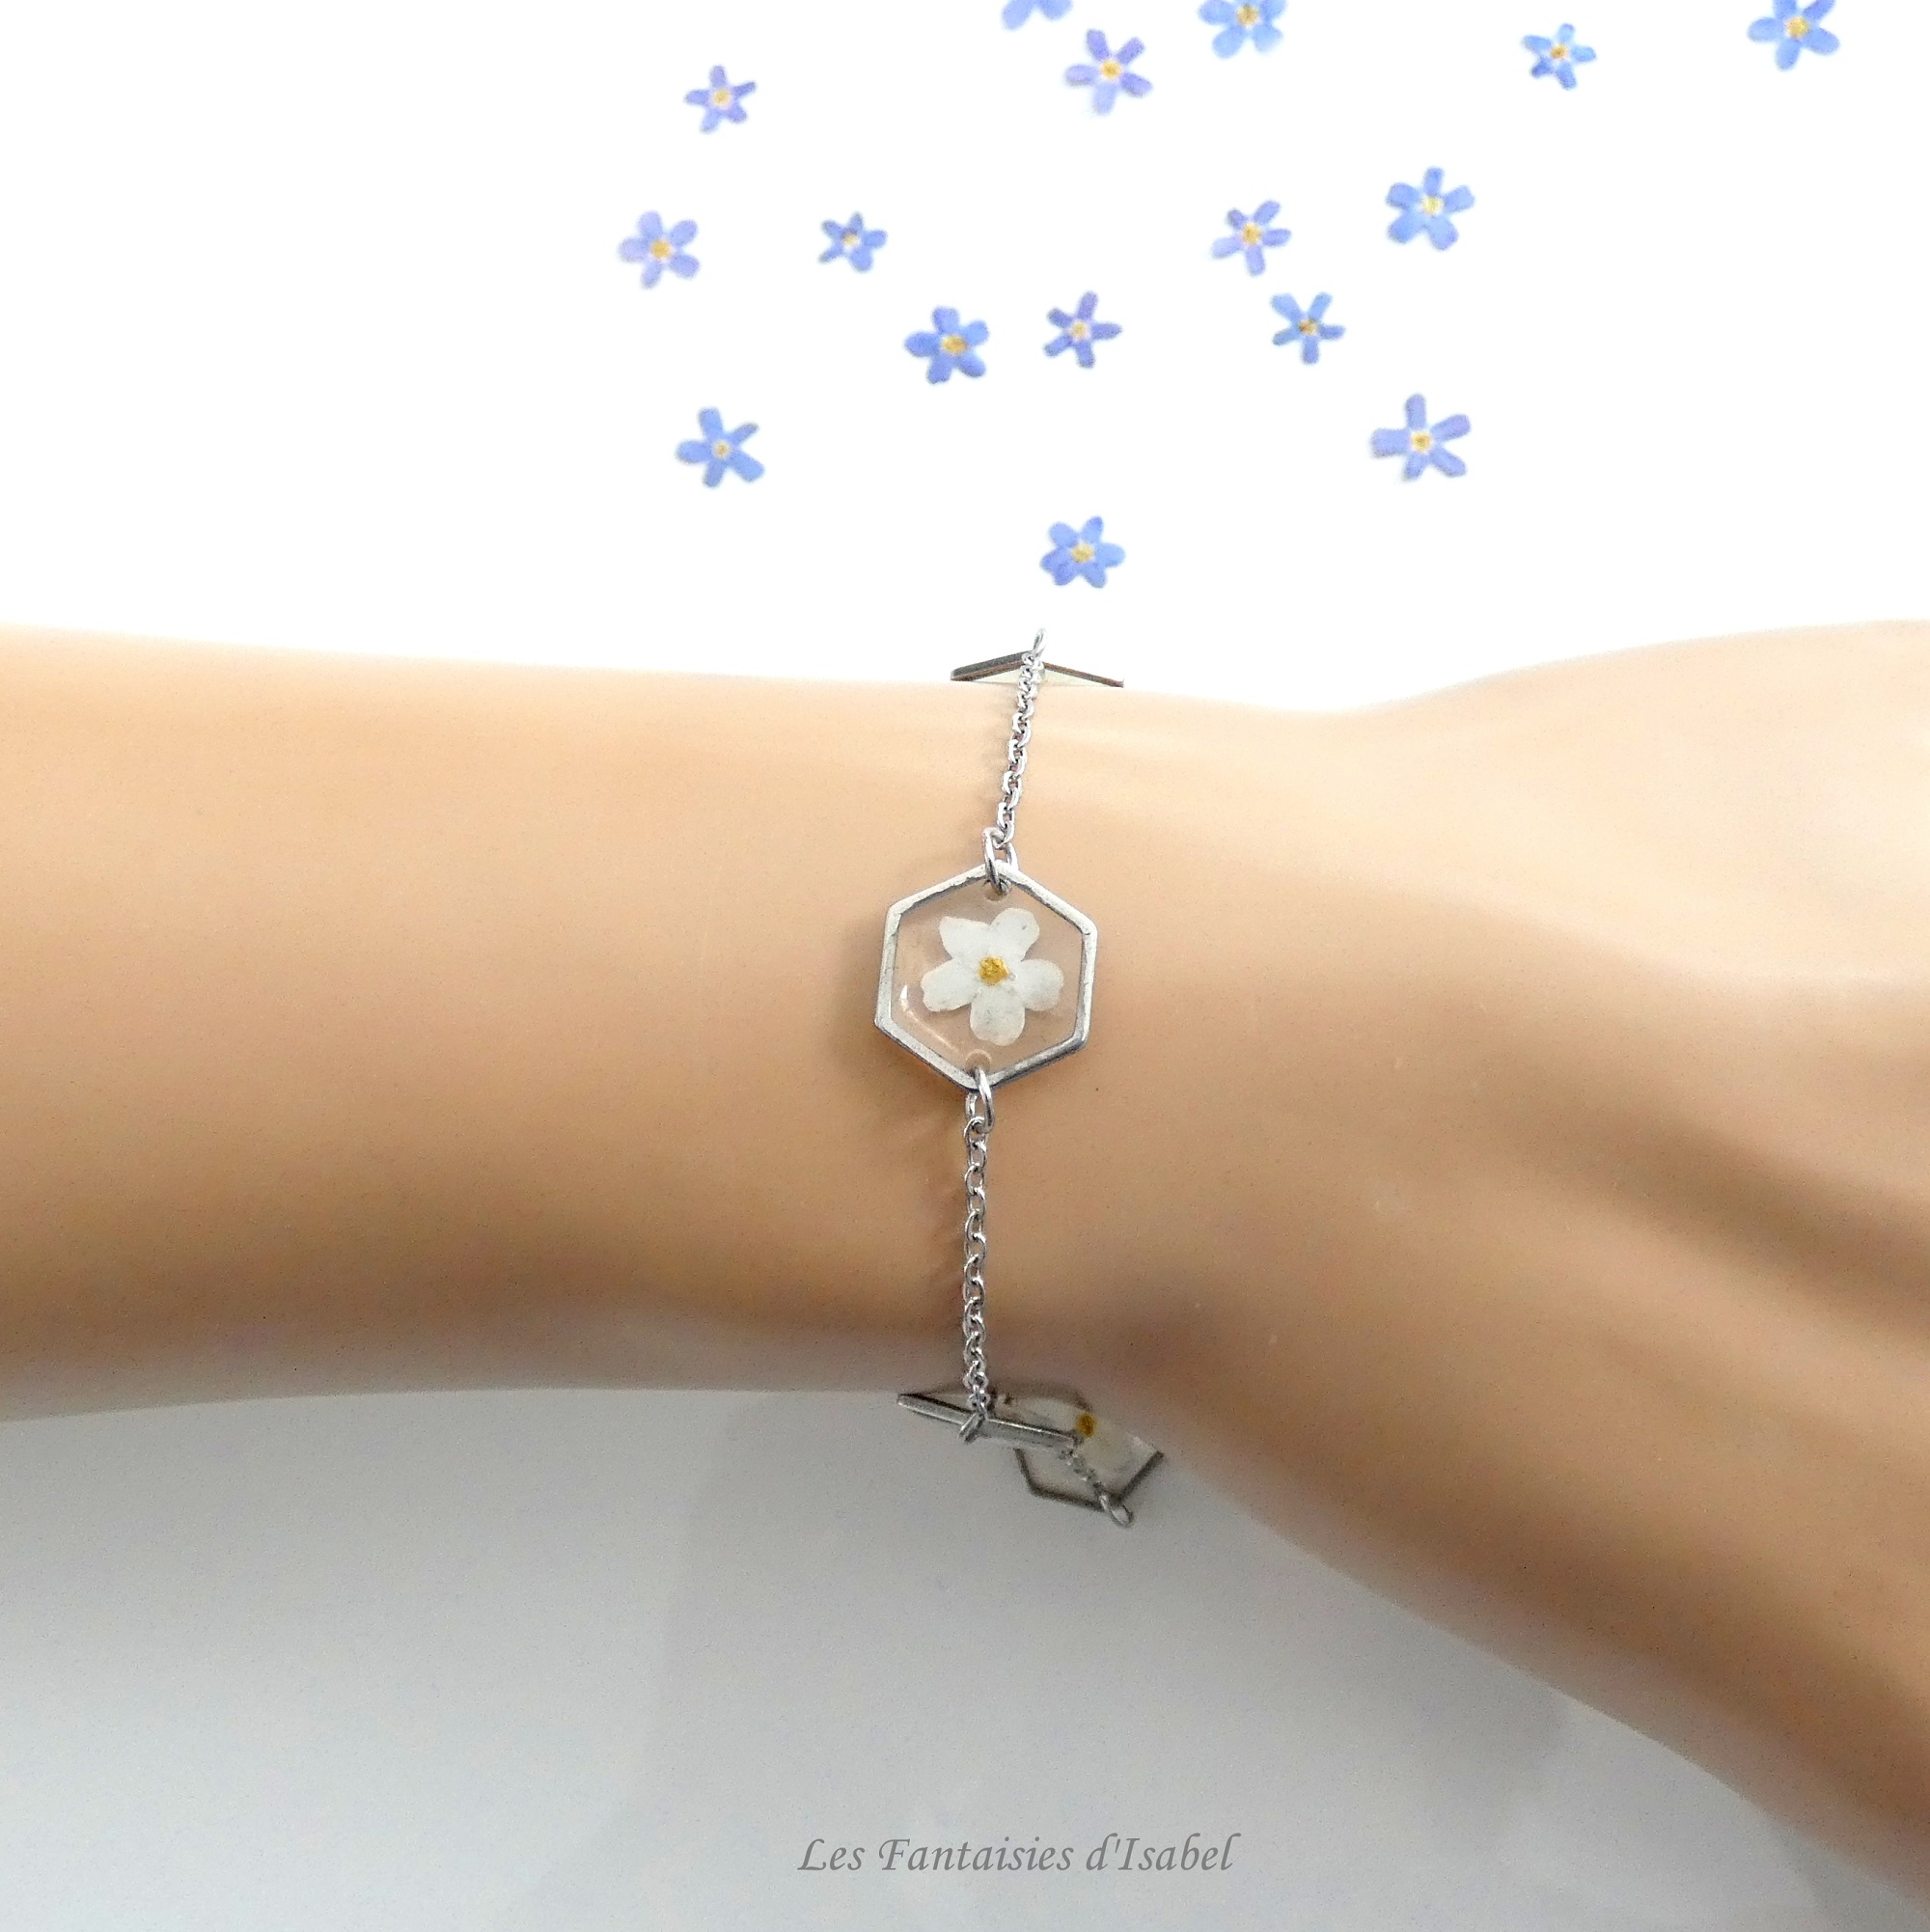 65-bracelet hexagonal acier inox fleur myosotis blanc artisanal landes porté